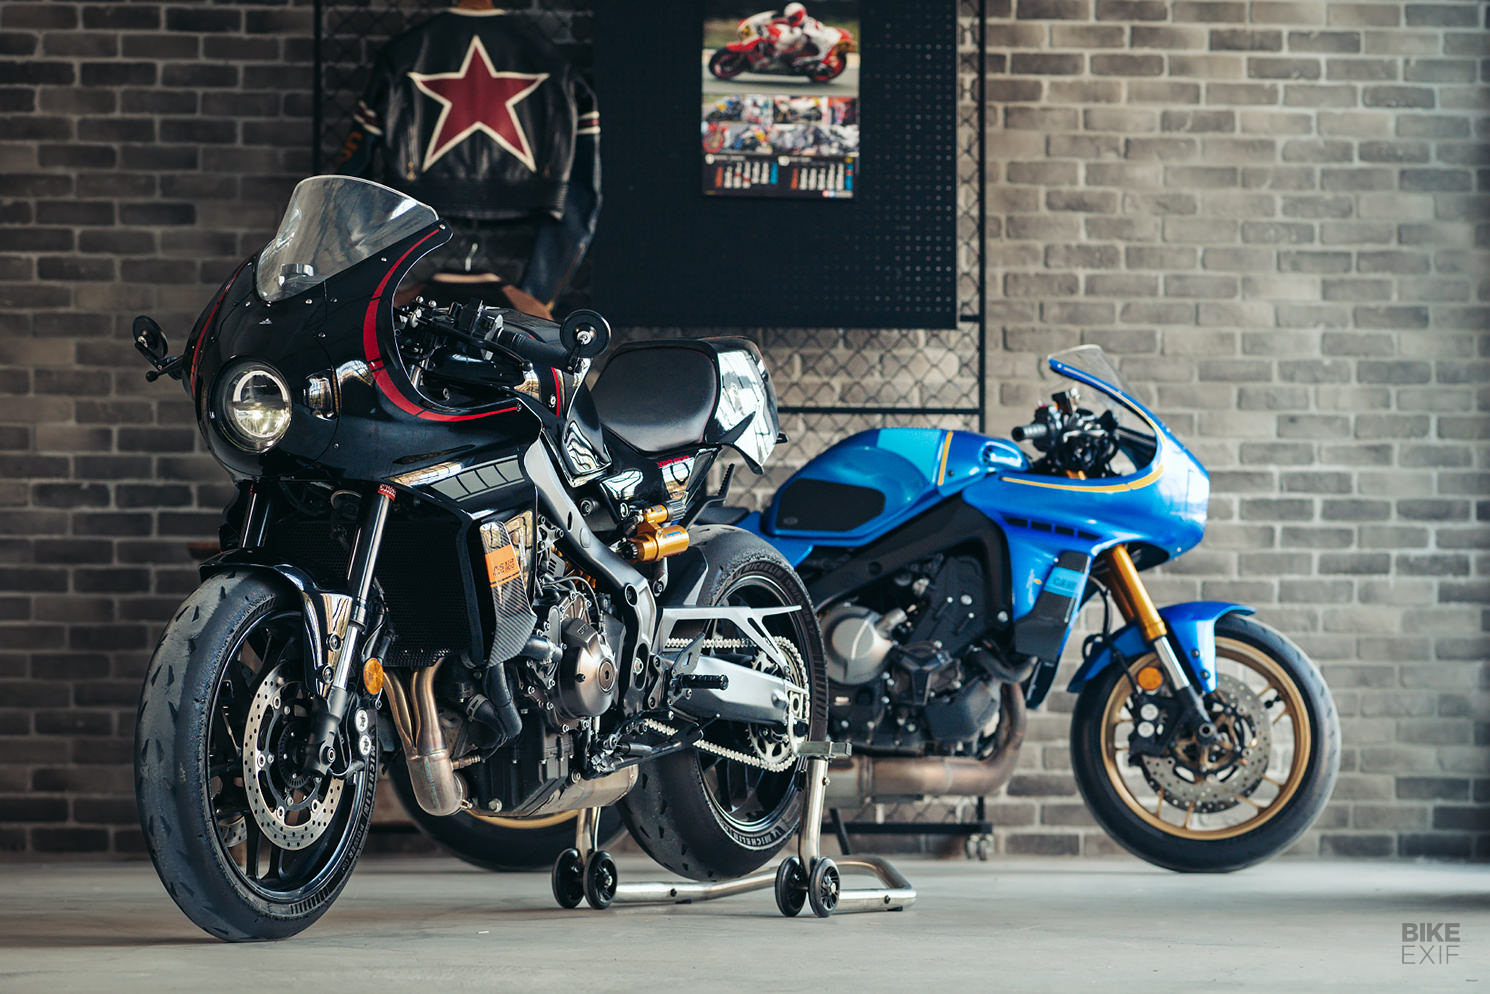 Speed Read: Ellaspede's vibrant custom Honda CB500X and more